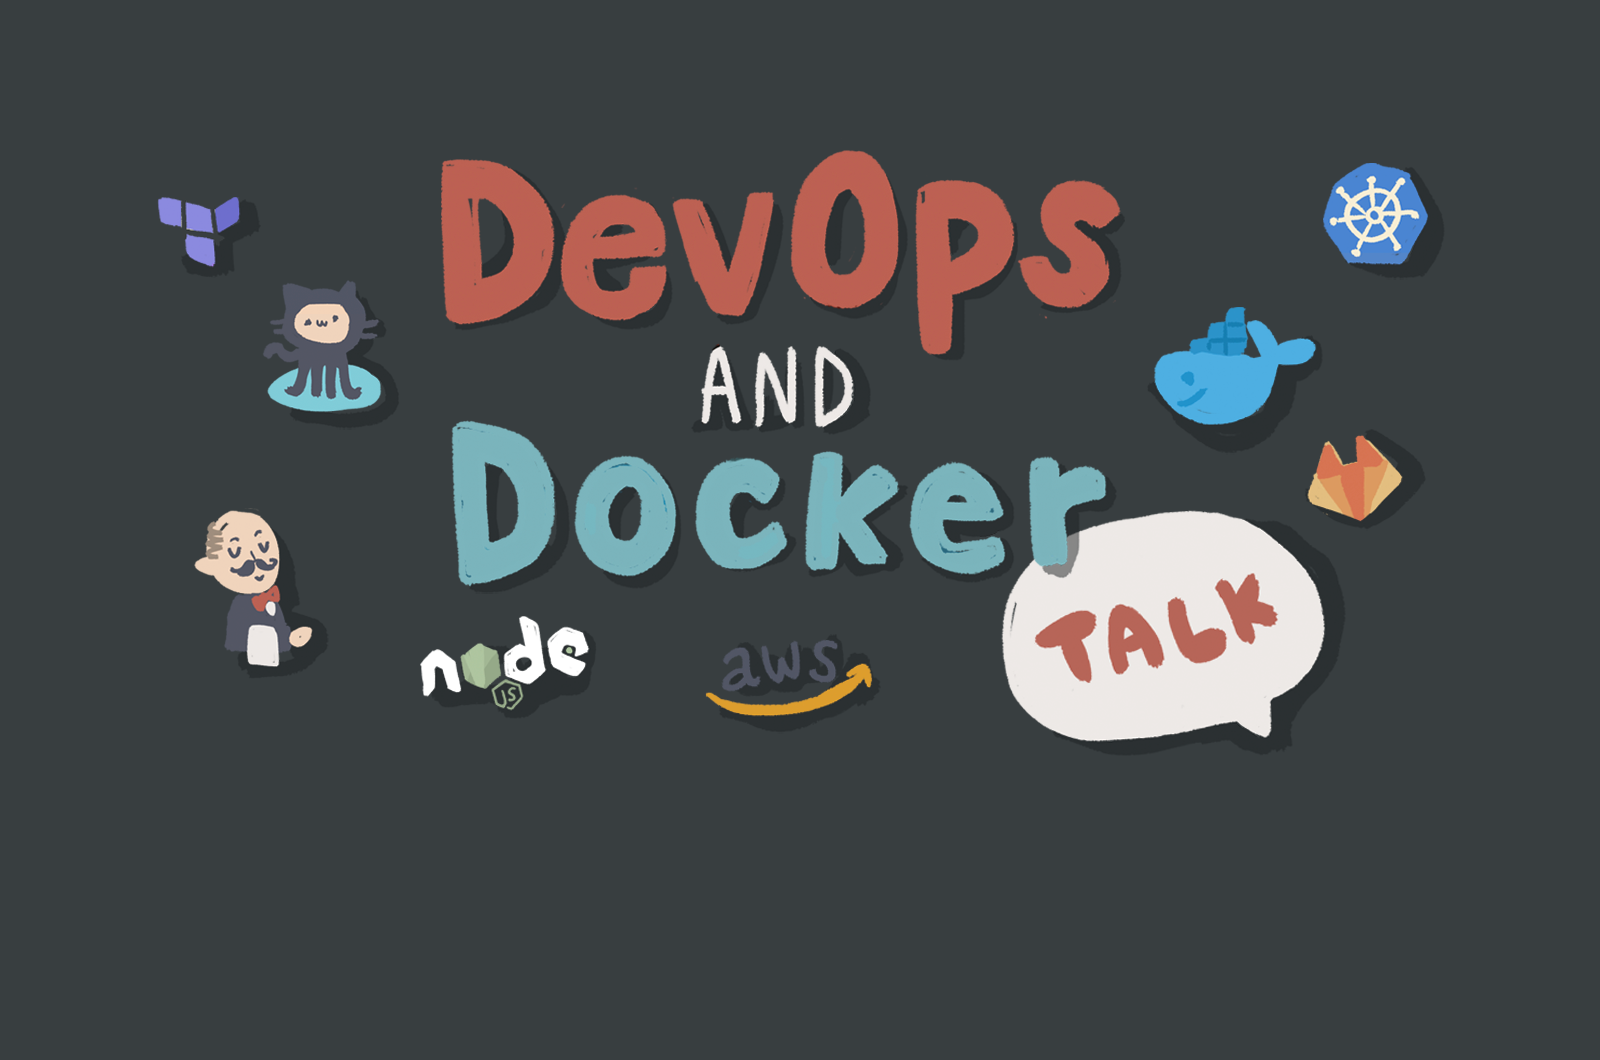 DevOps and Docker Talk Podcast